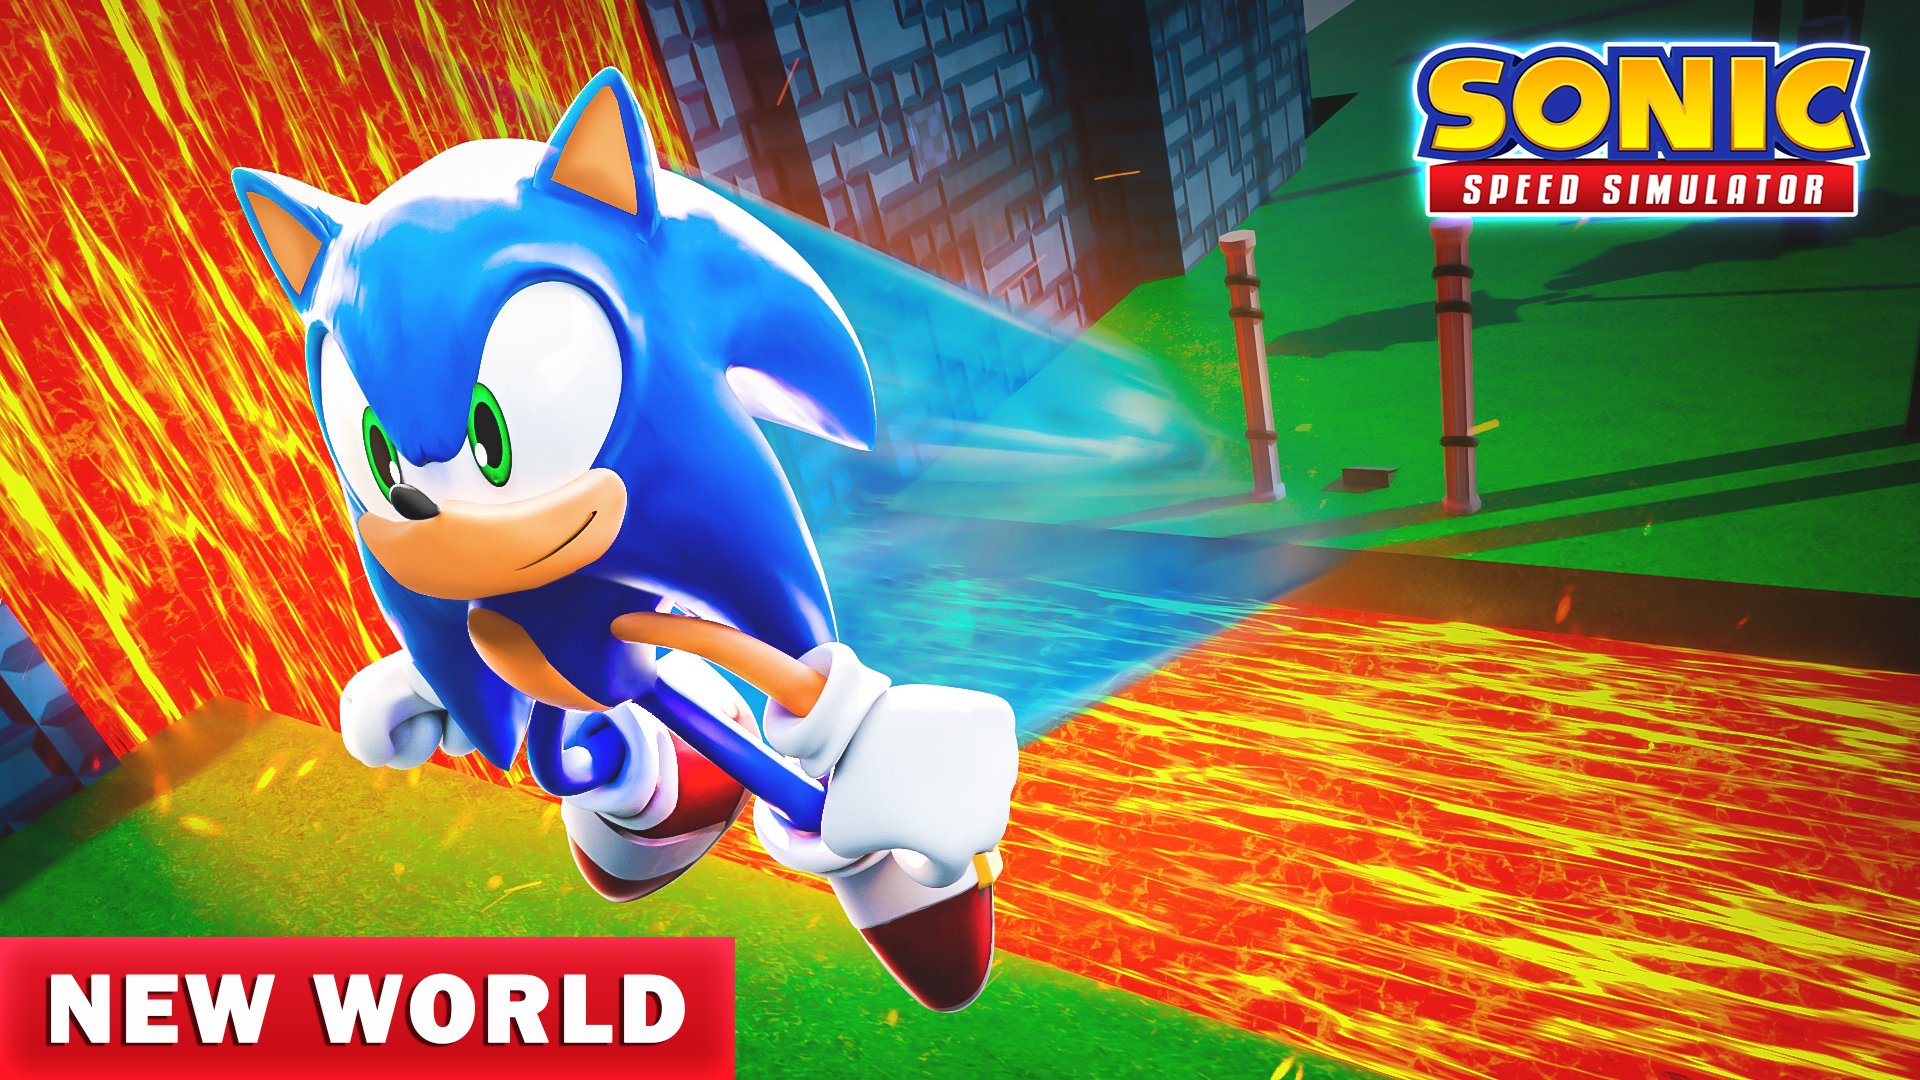 Sonic Speed Simulator #SonicRoblox